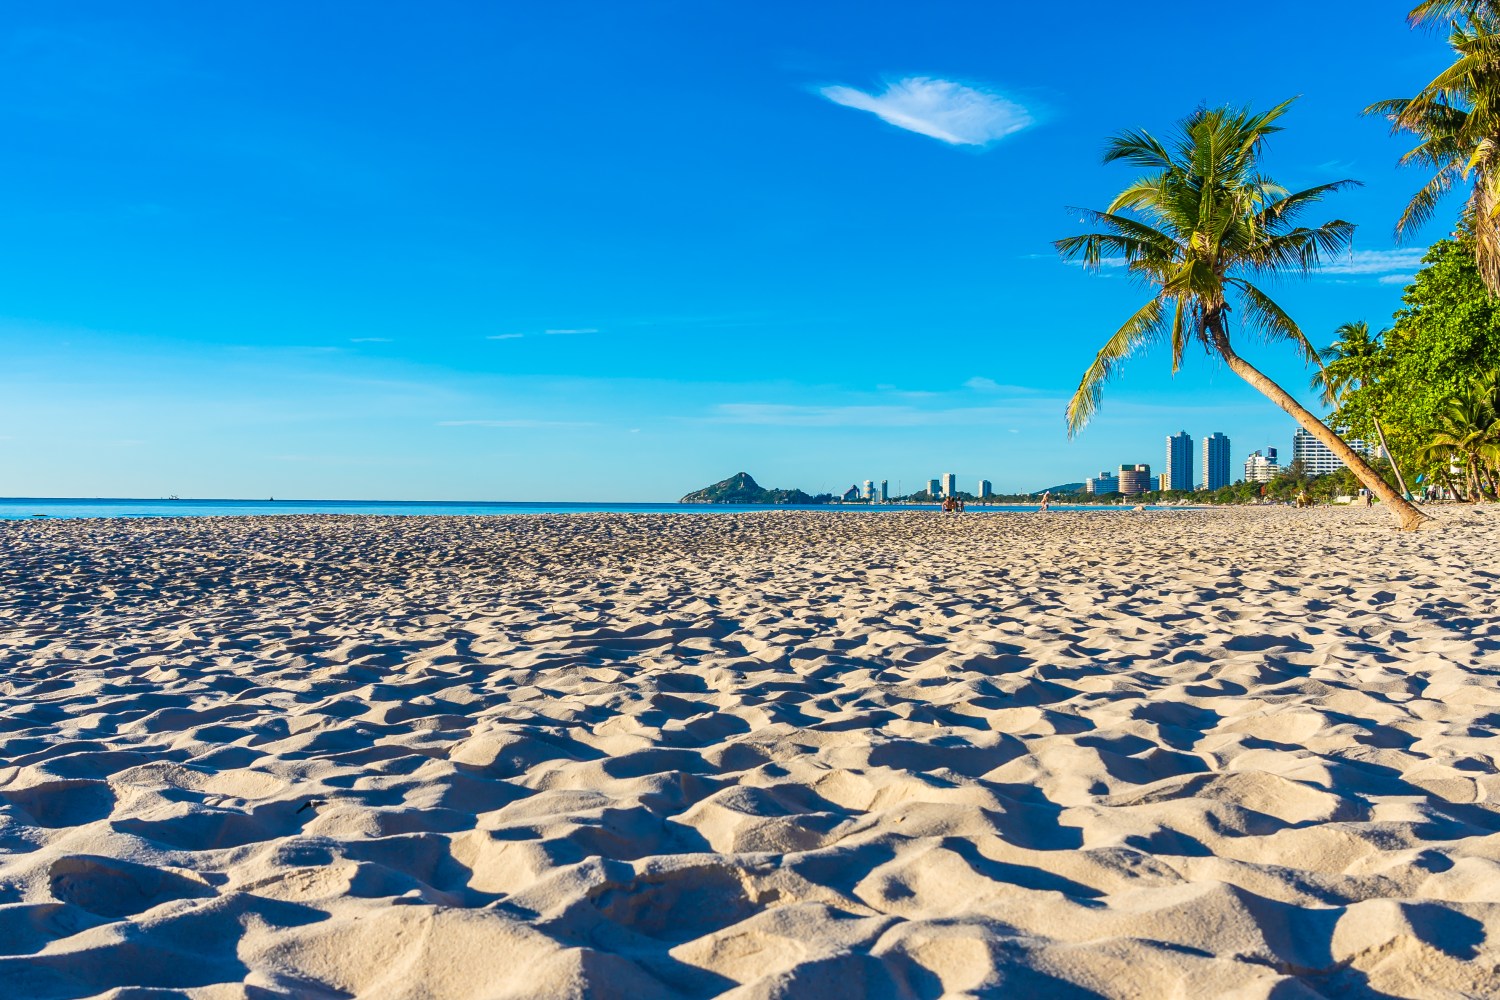 Stunning beach with coconut tree